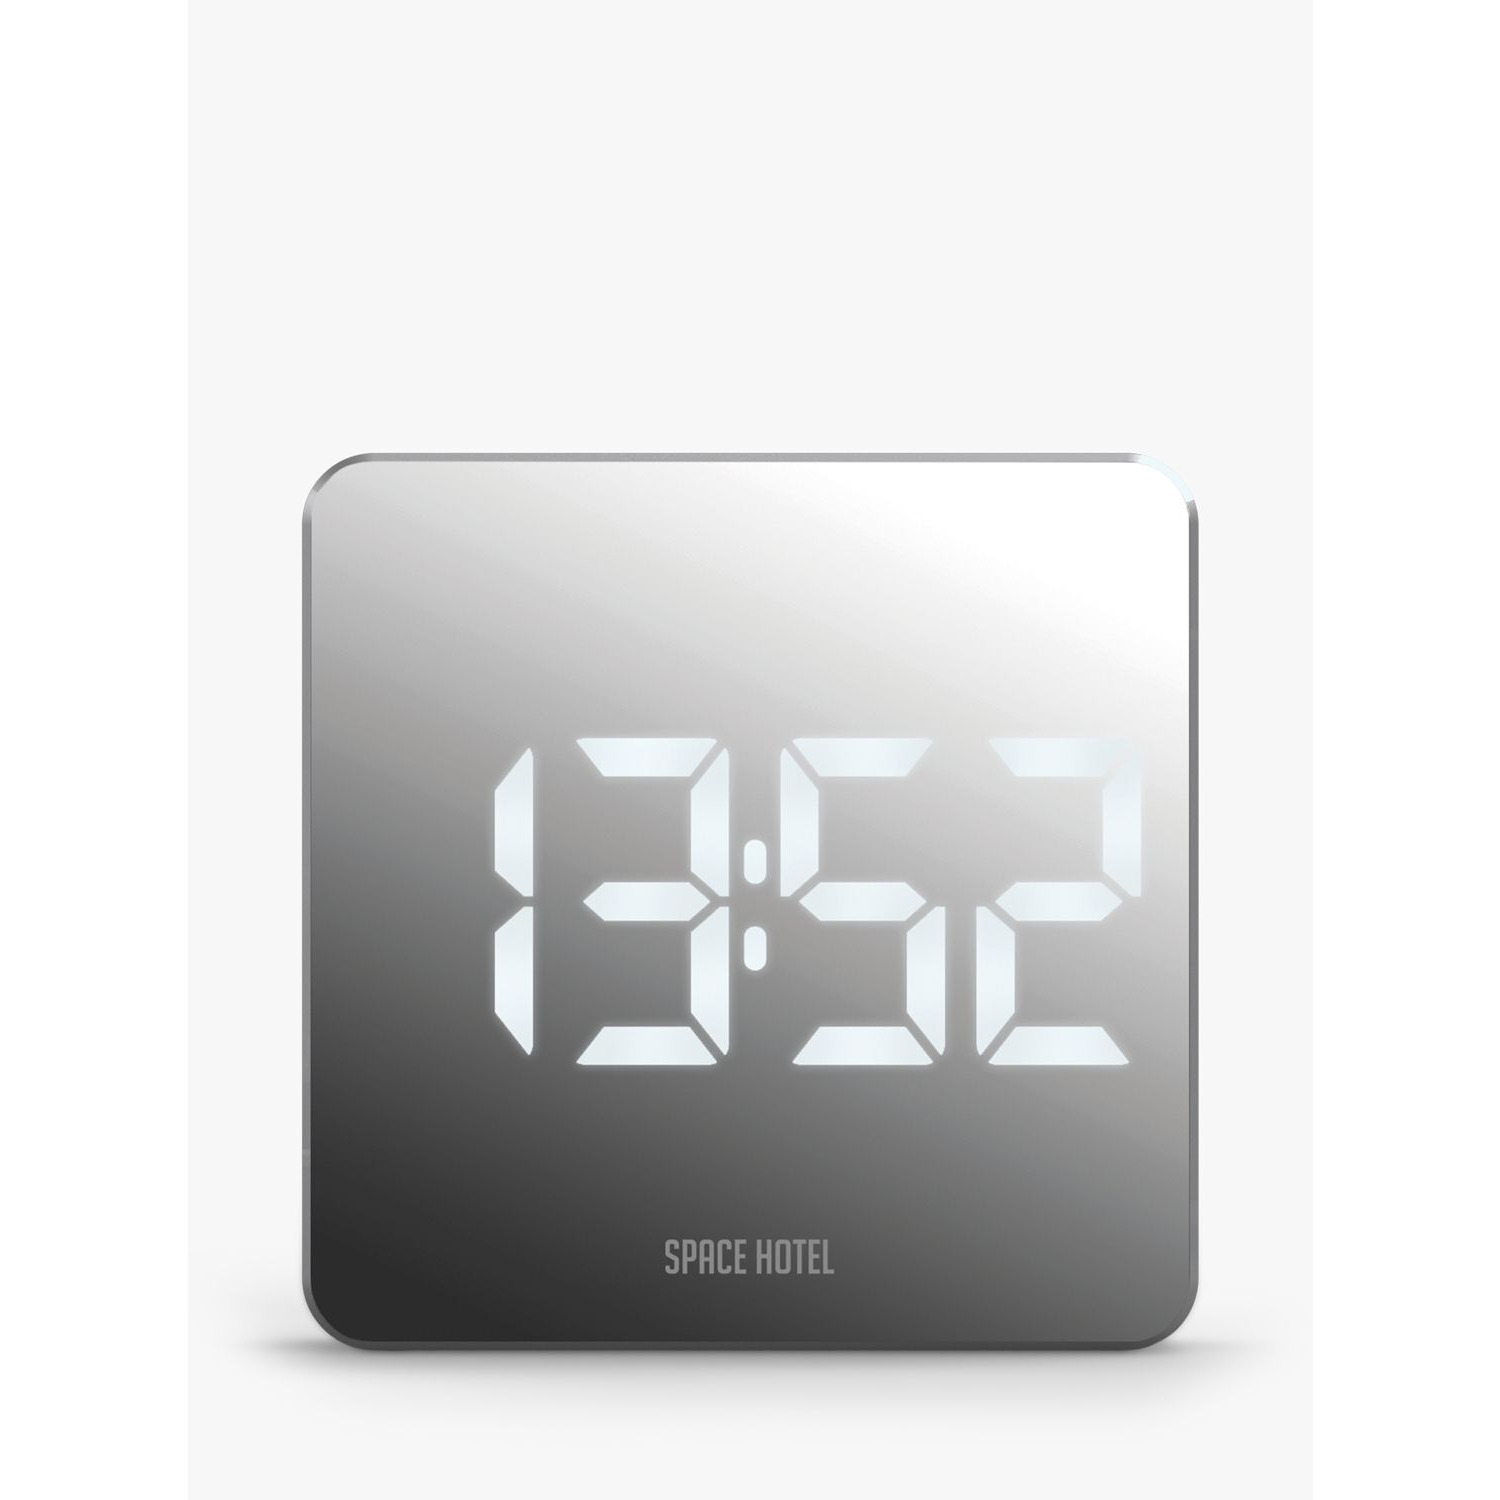 Space Hotel Orbatron LED Digital Alarm Clock - image 1